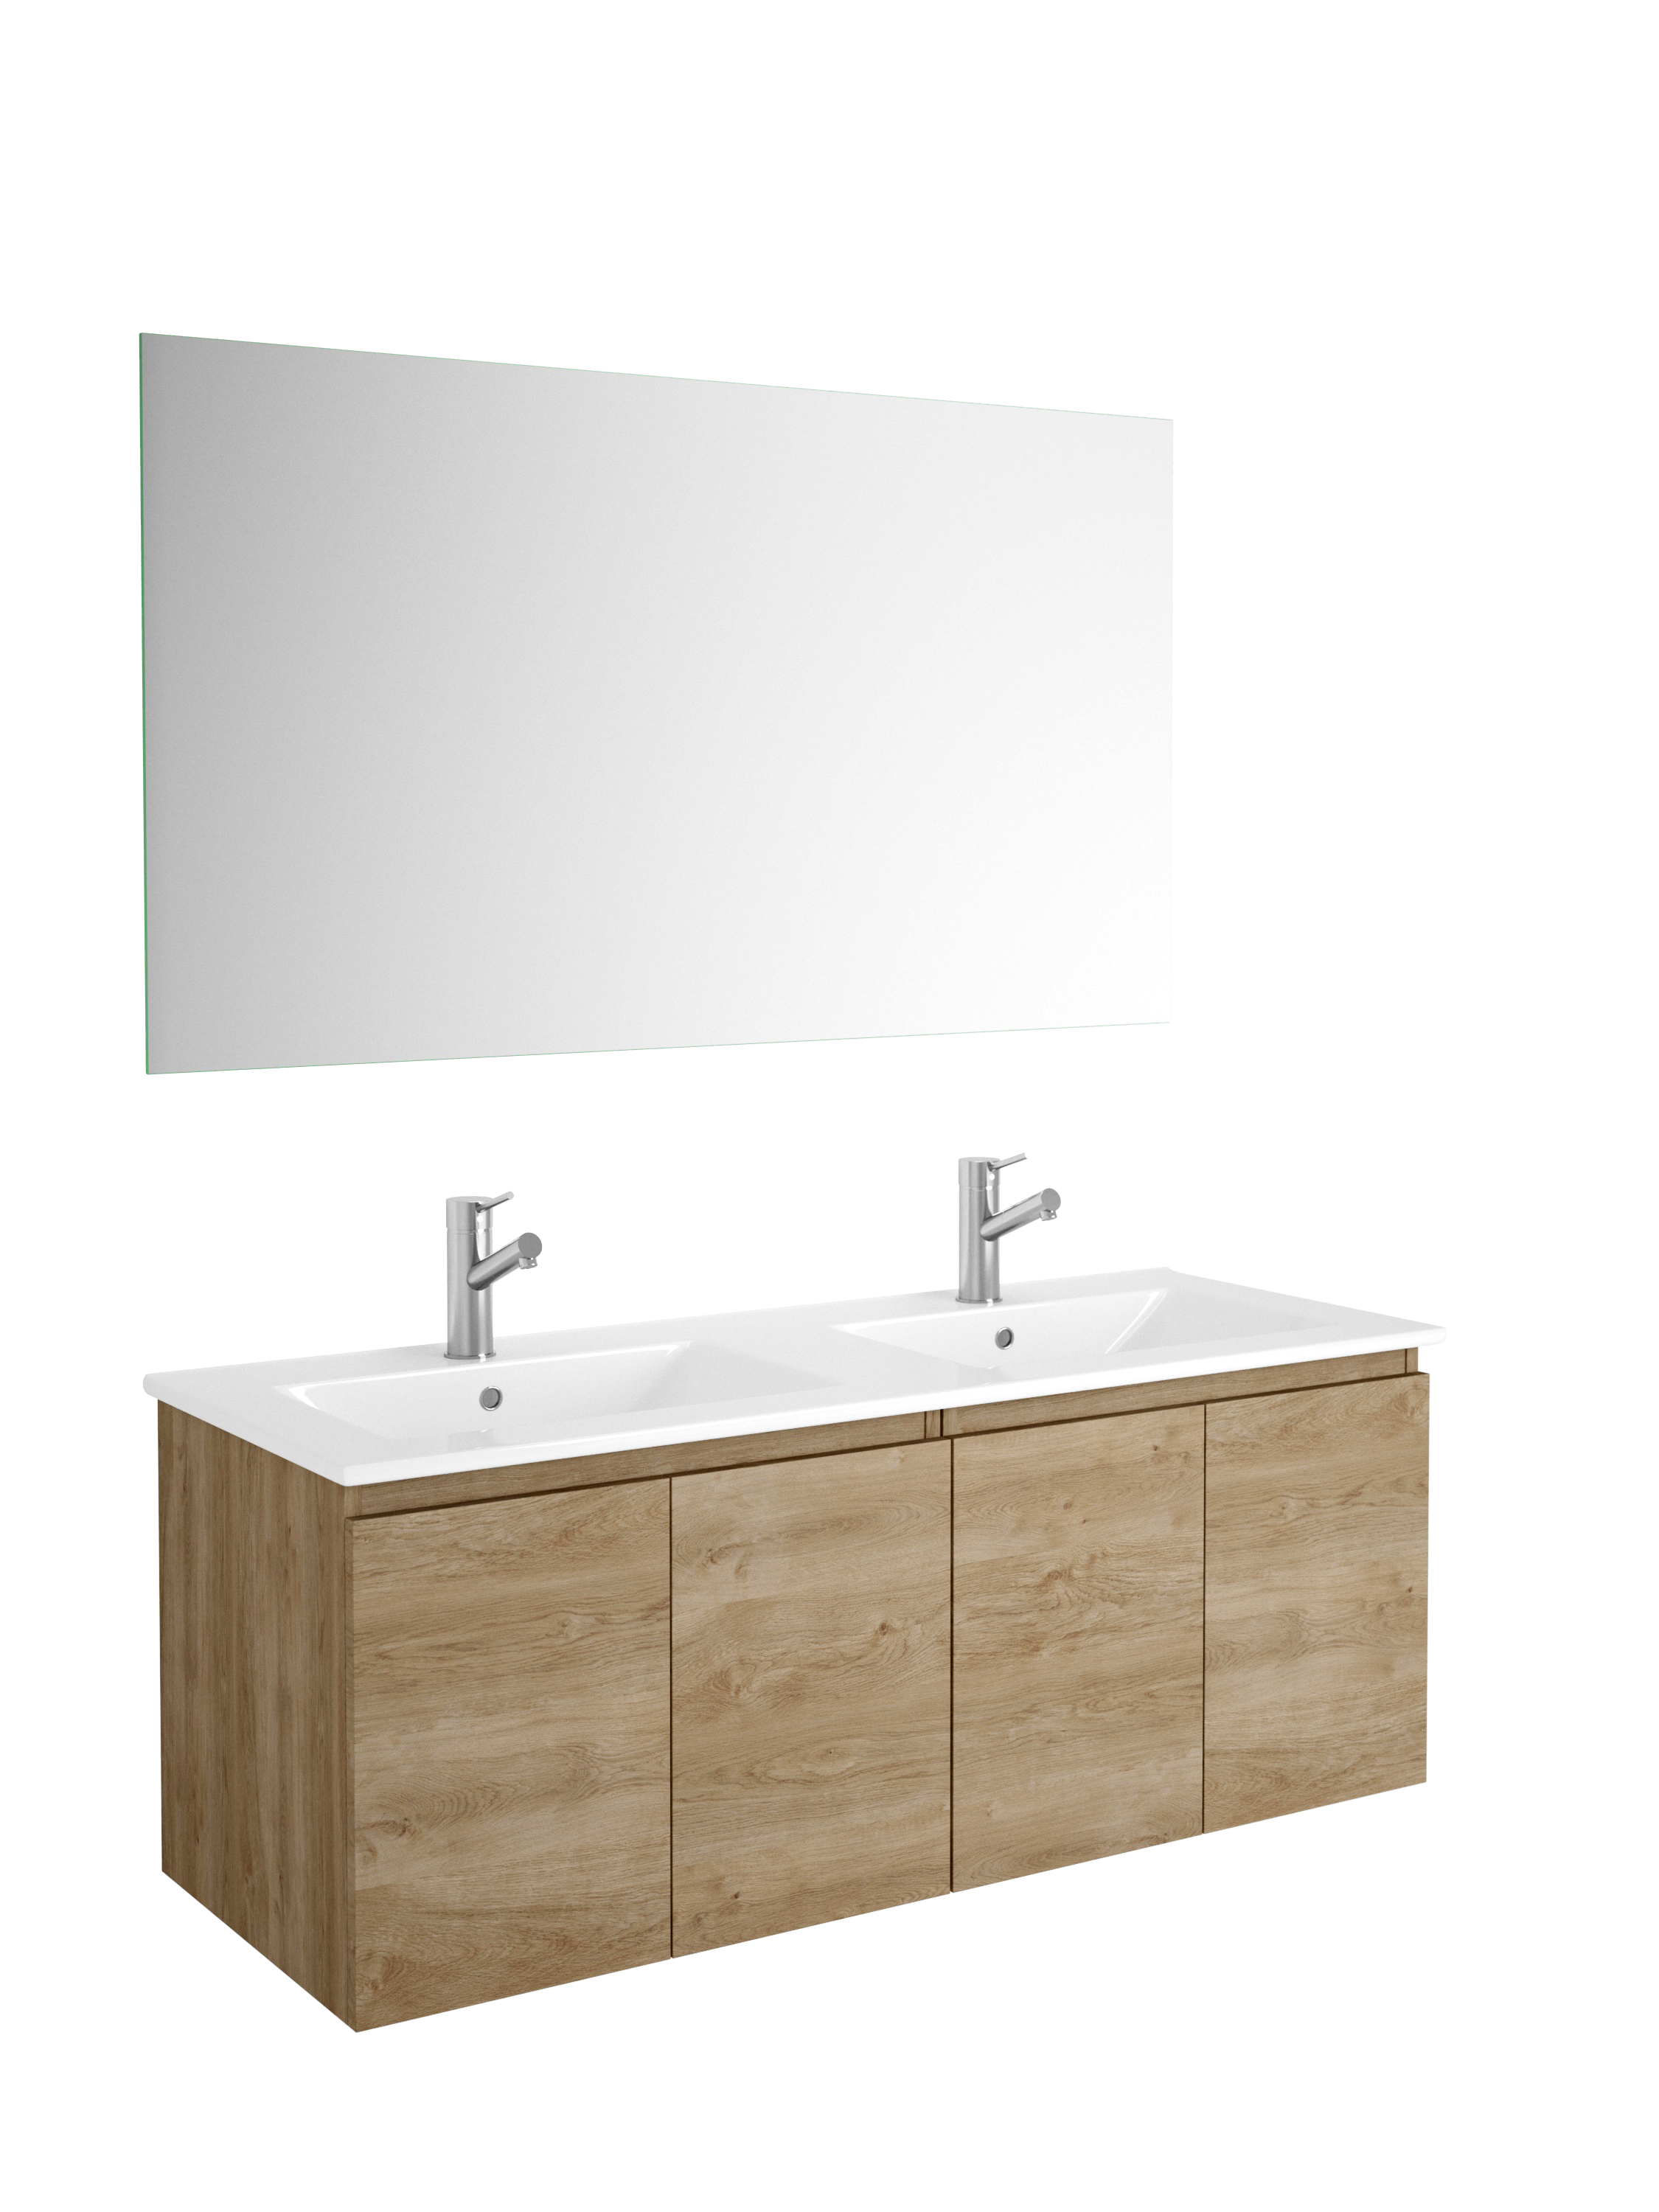 DAX Malibu Bathroom Vanity Cabinet with Ceramic Basin Included